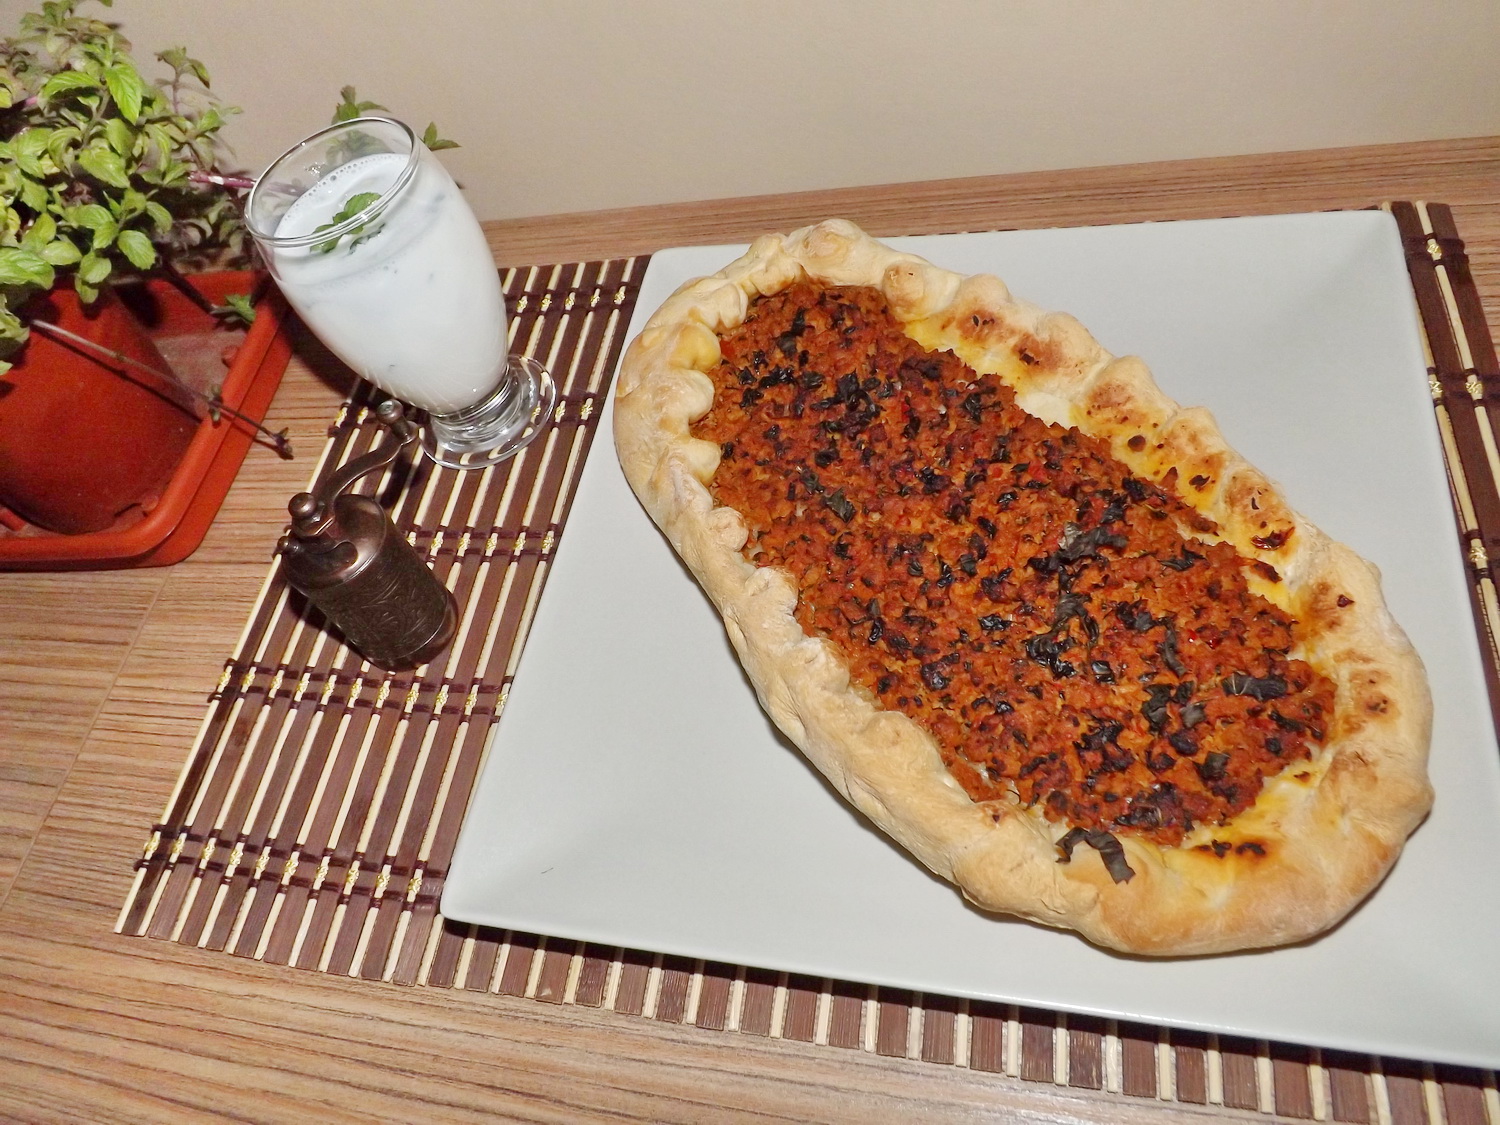 Pizza turceasca